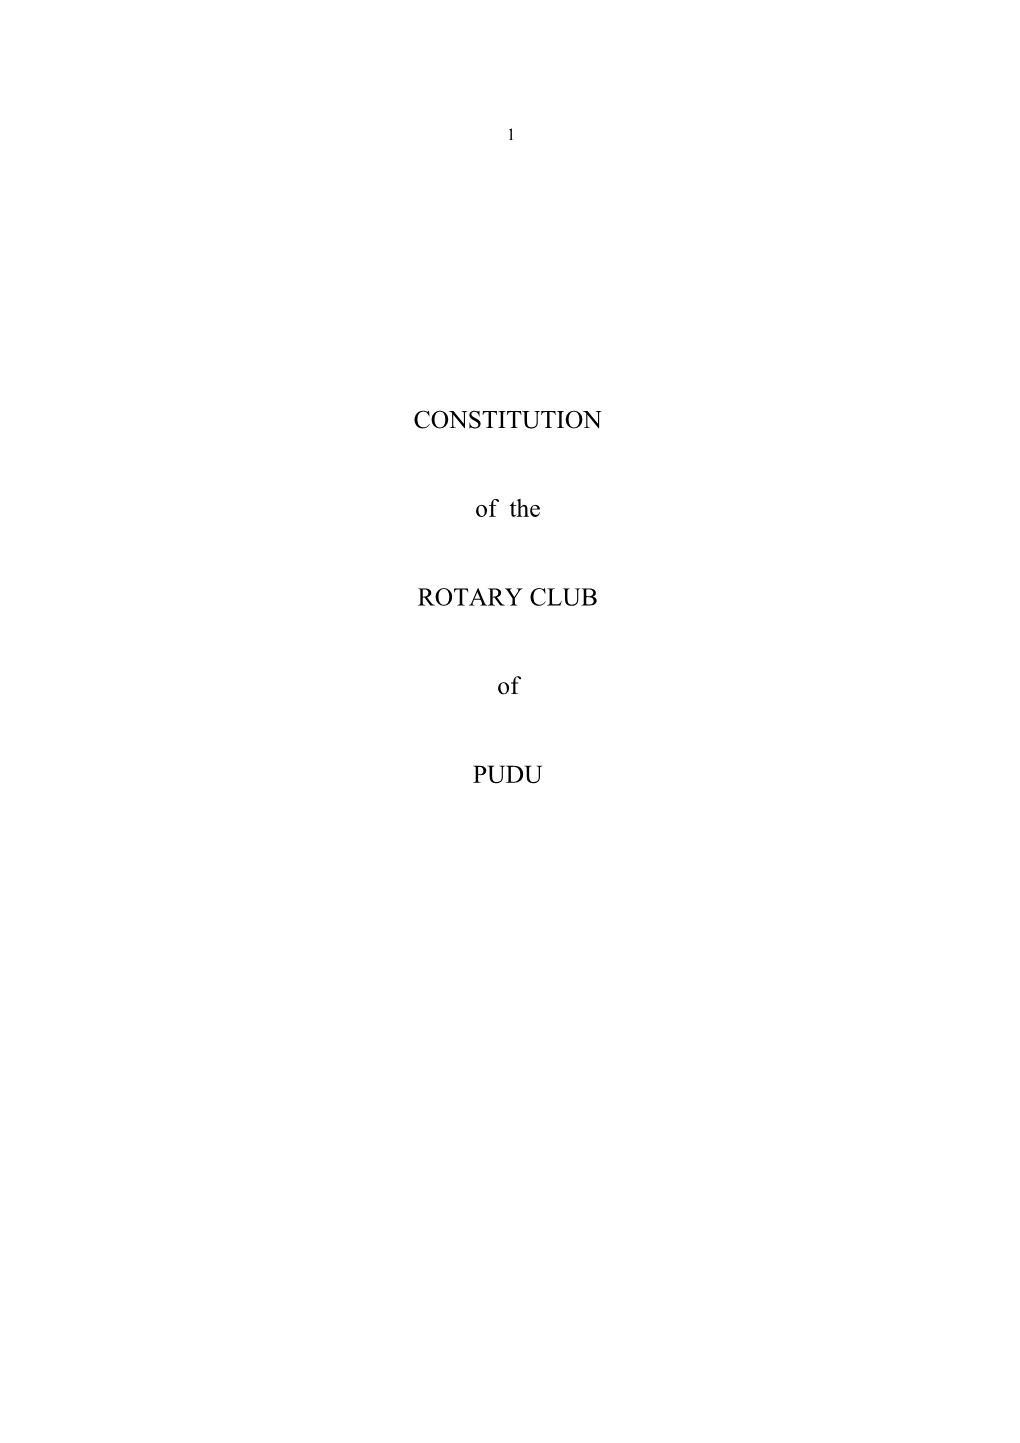 Constitution of the Kelab Rotary Pudu